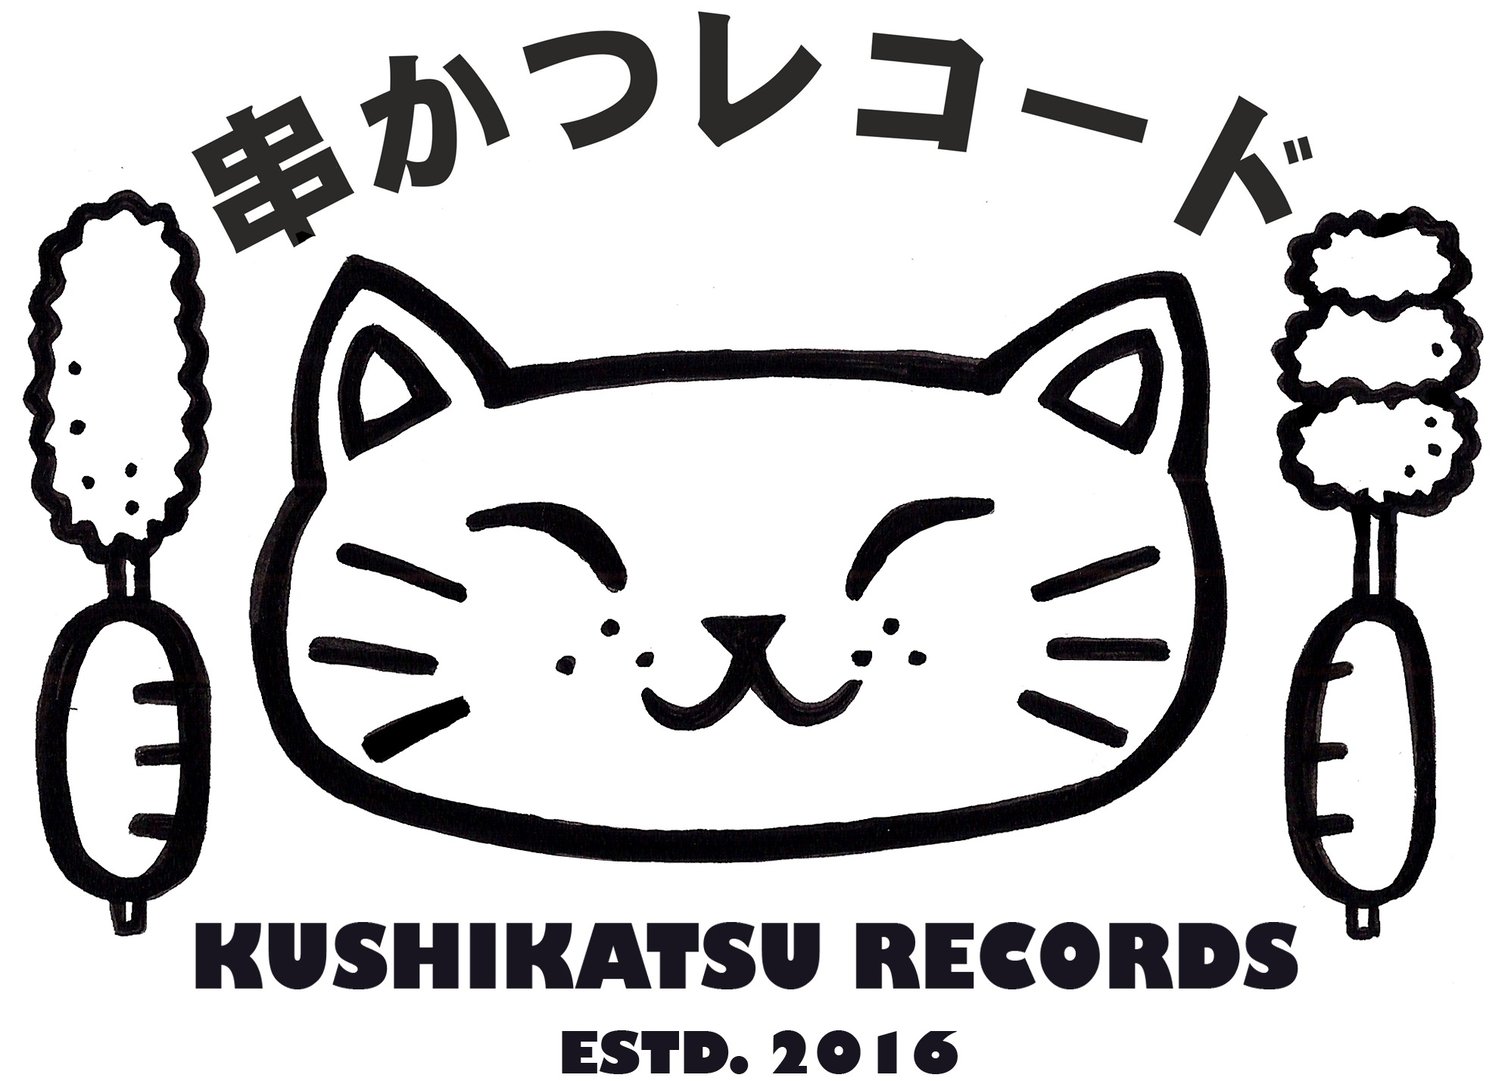 Kushikatsu Records